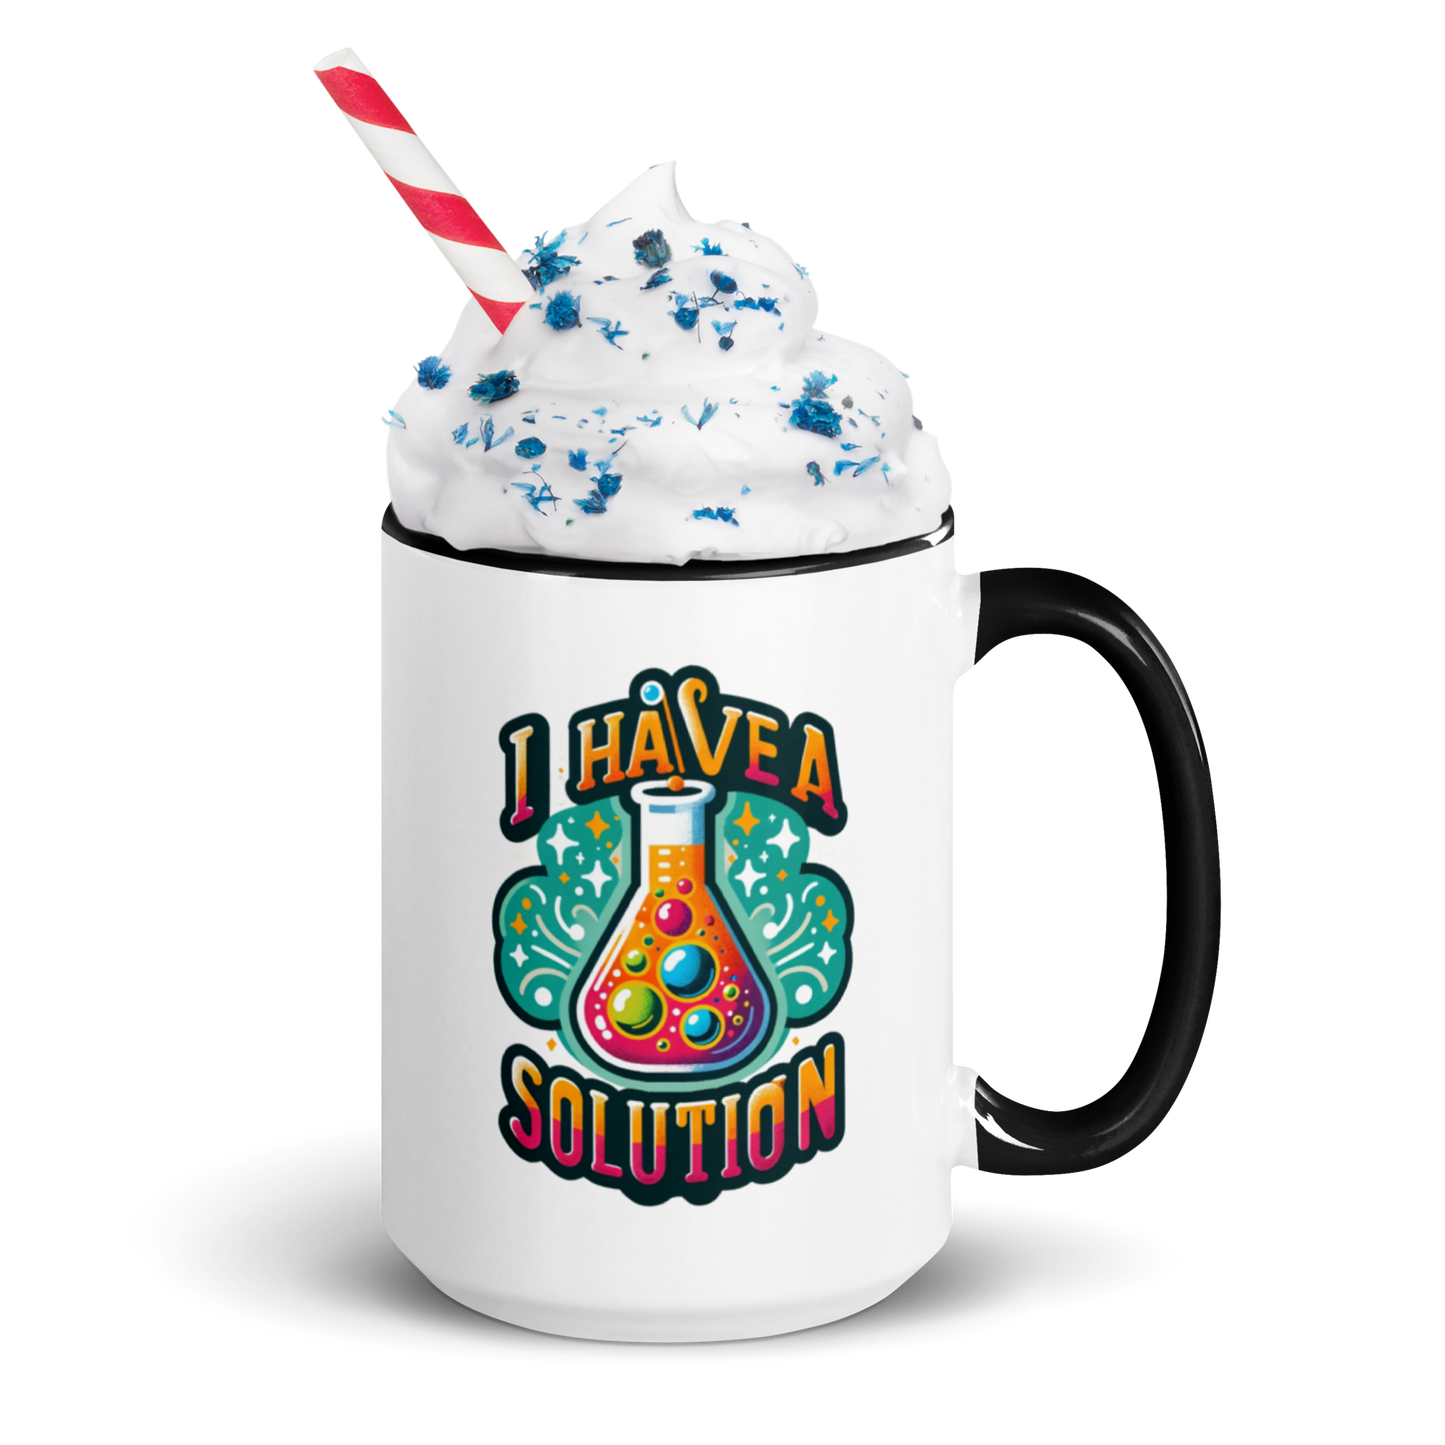 Science Solution Mug